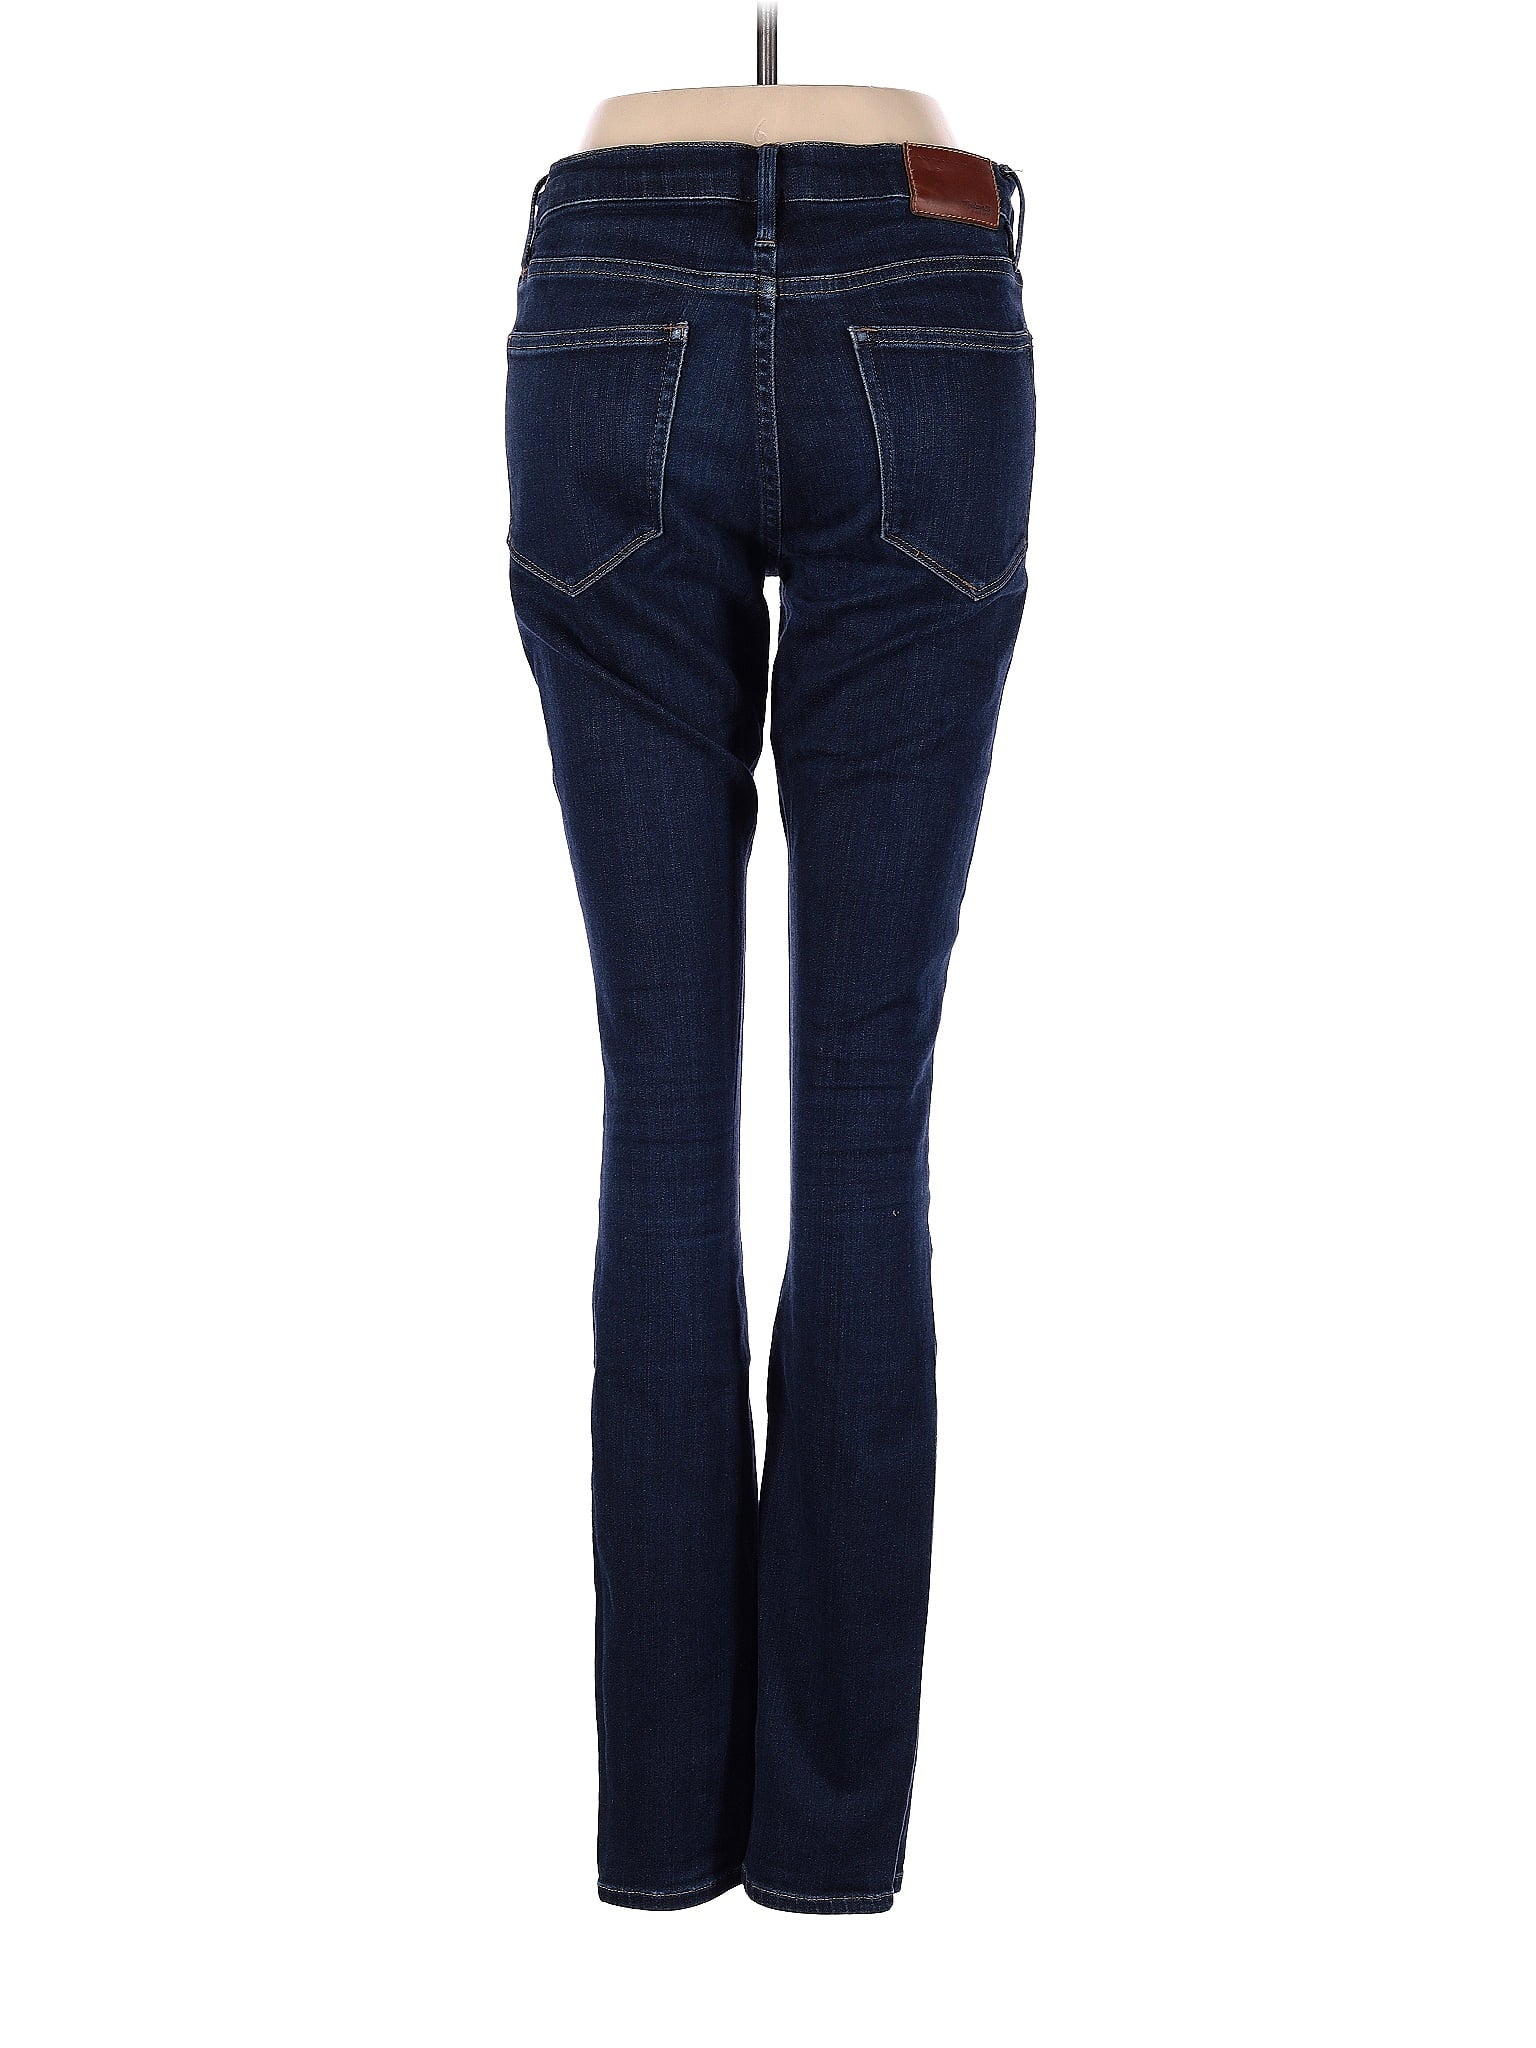 Low-Rise Jeans waist size - 28